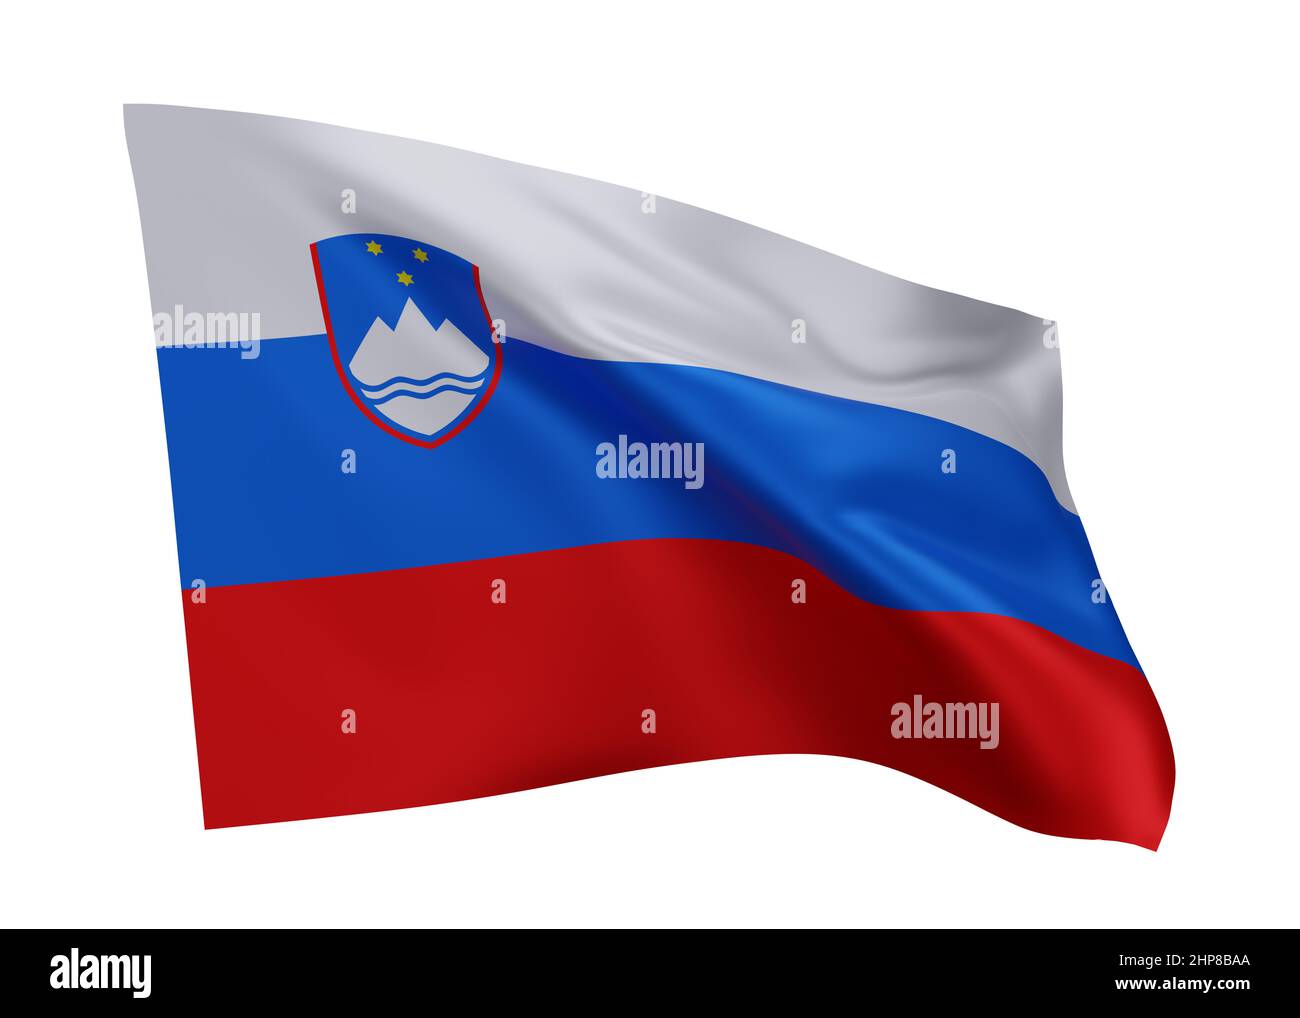 3d illustration flag of Republic of Slovenia. Slovenia high resolution flag isolated against white background. 3d rendering Stock Photo